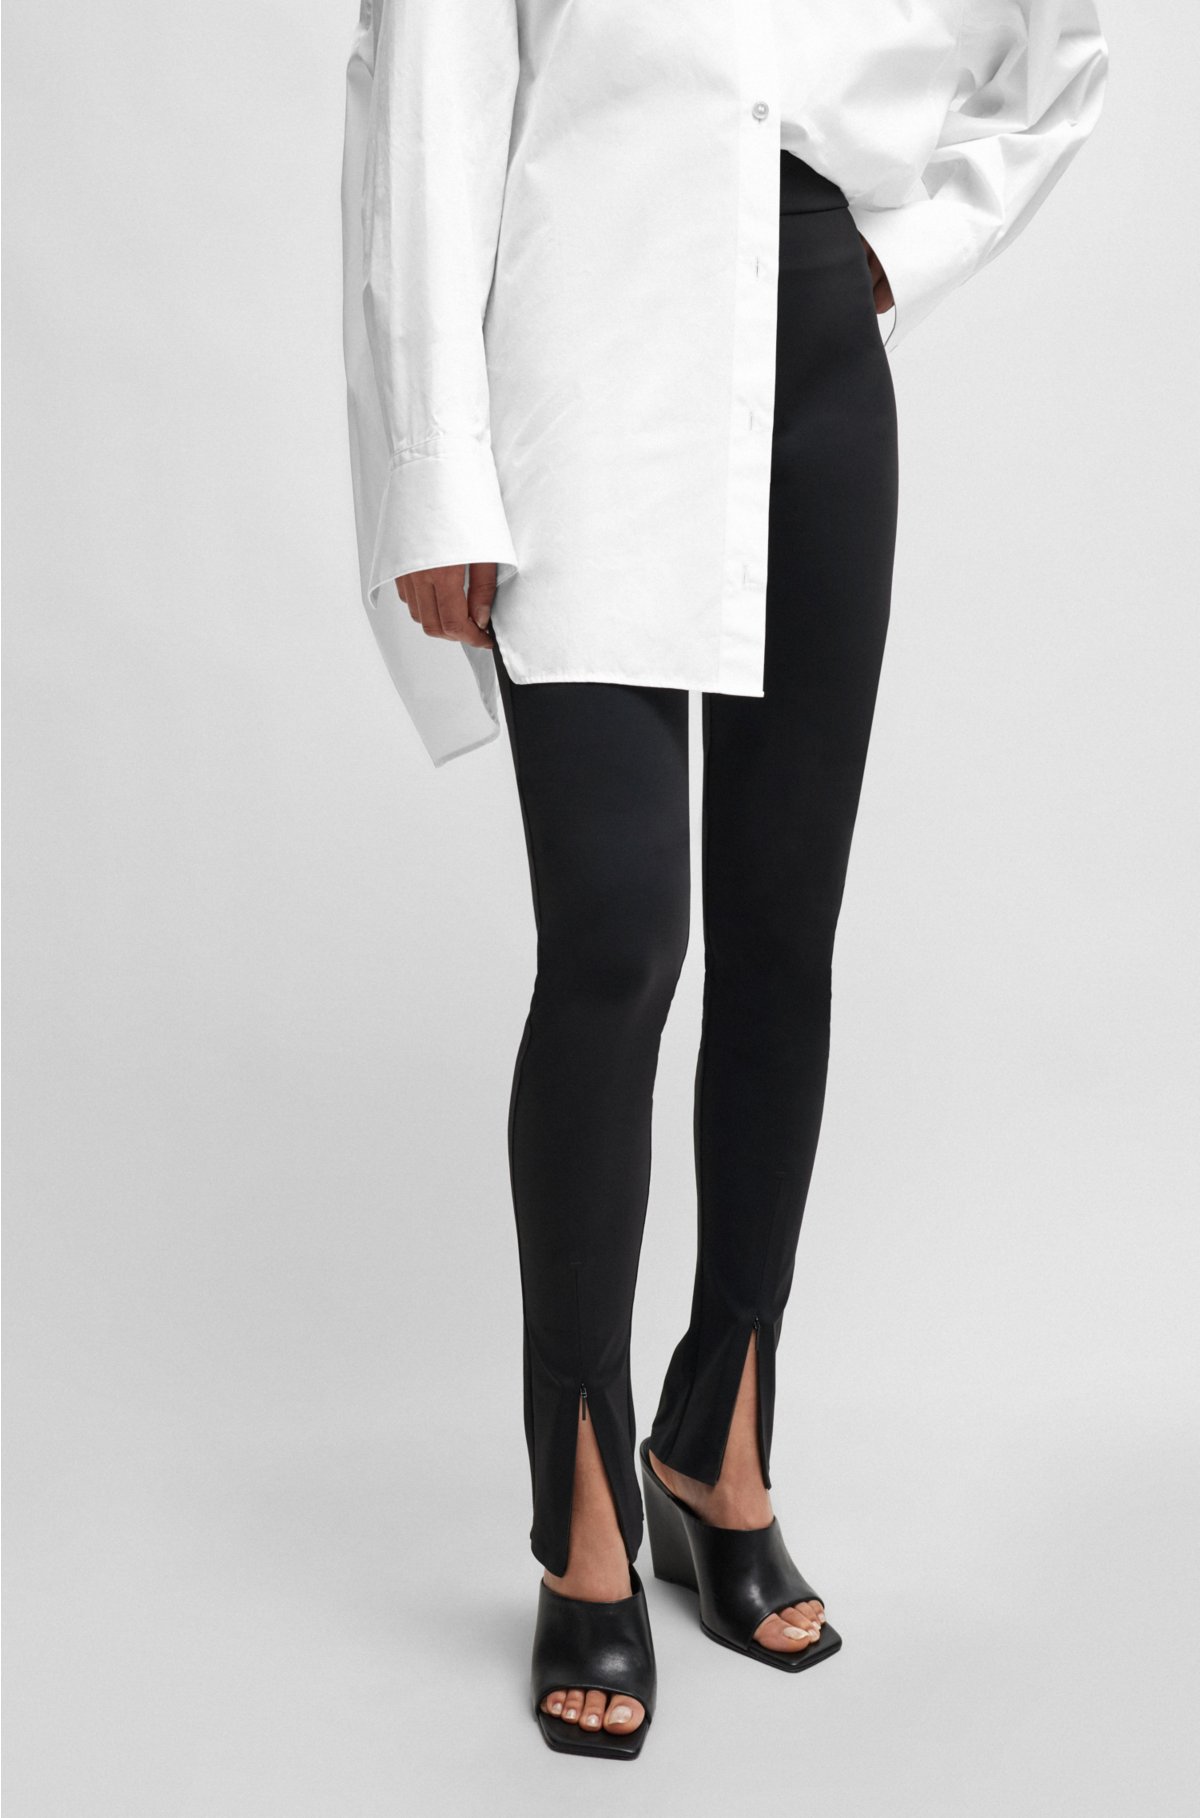 BOSS - Slim-fit leggings with logo details and zip hems